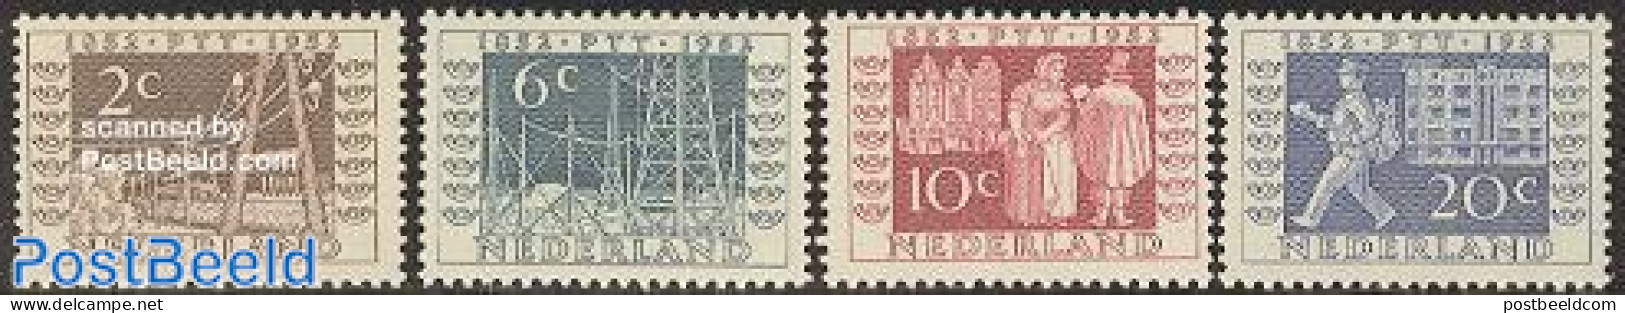 Netherlands 1952 Stamp Centenary, ITEP Exposition 4v, Mint NH, Science - Transport - Telecommunication - Post - Railways - Nuevos